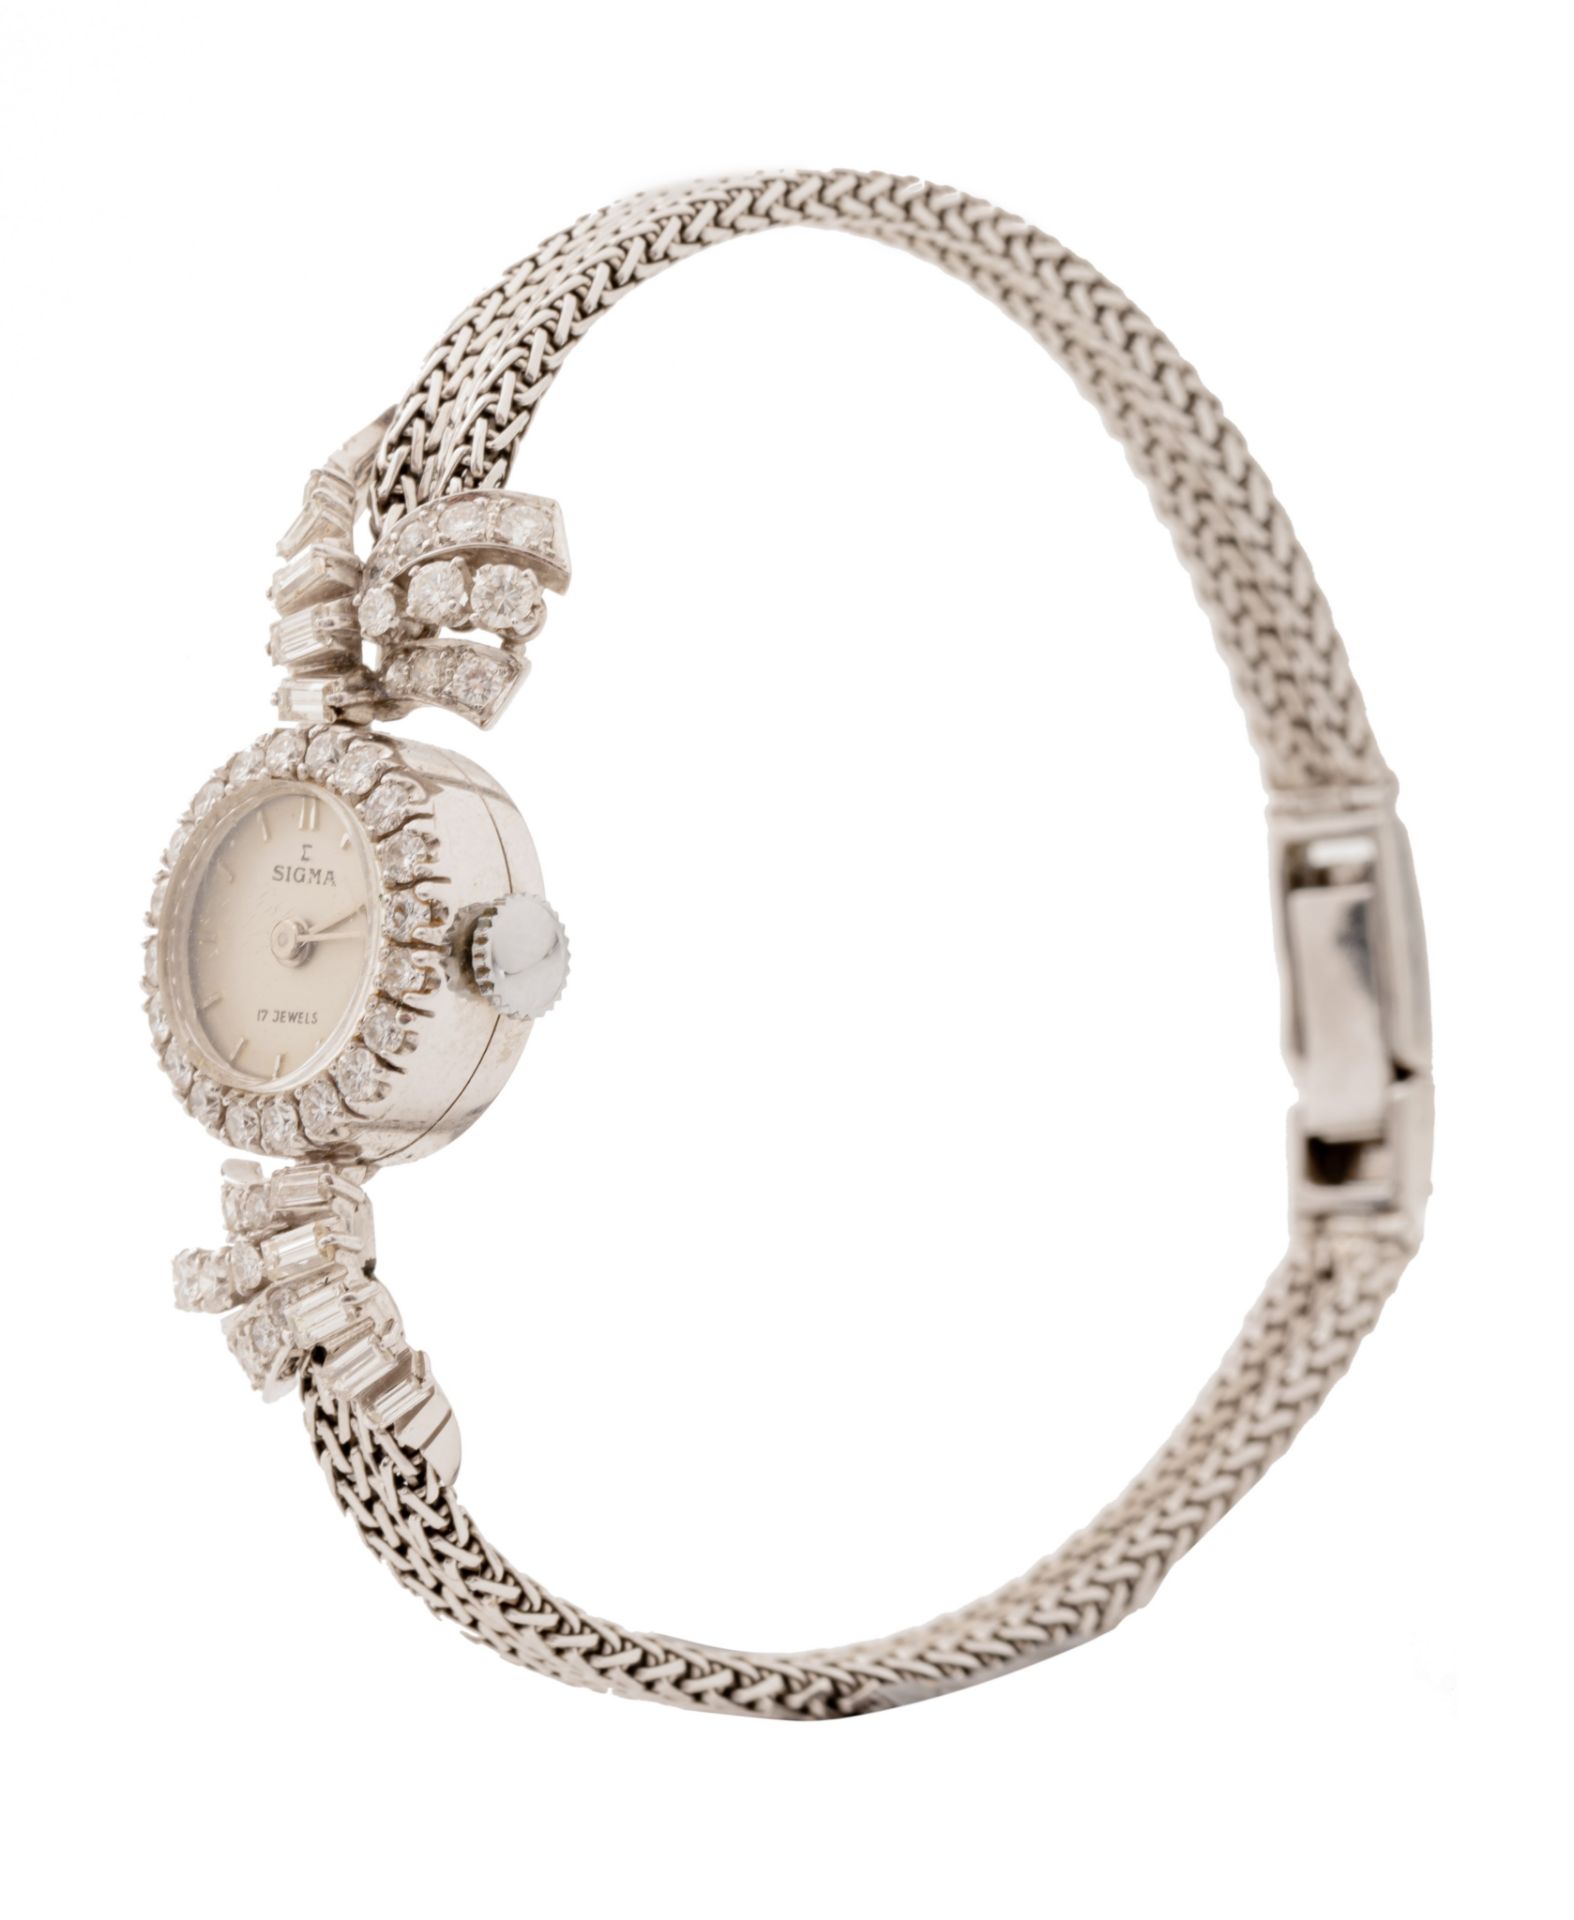 An 18ct platinum Sigma ladies' watch, set with brilliant-cut diamonds - Image 8 of 8